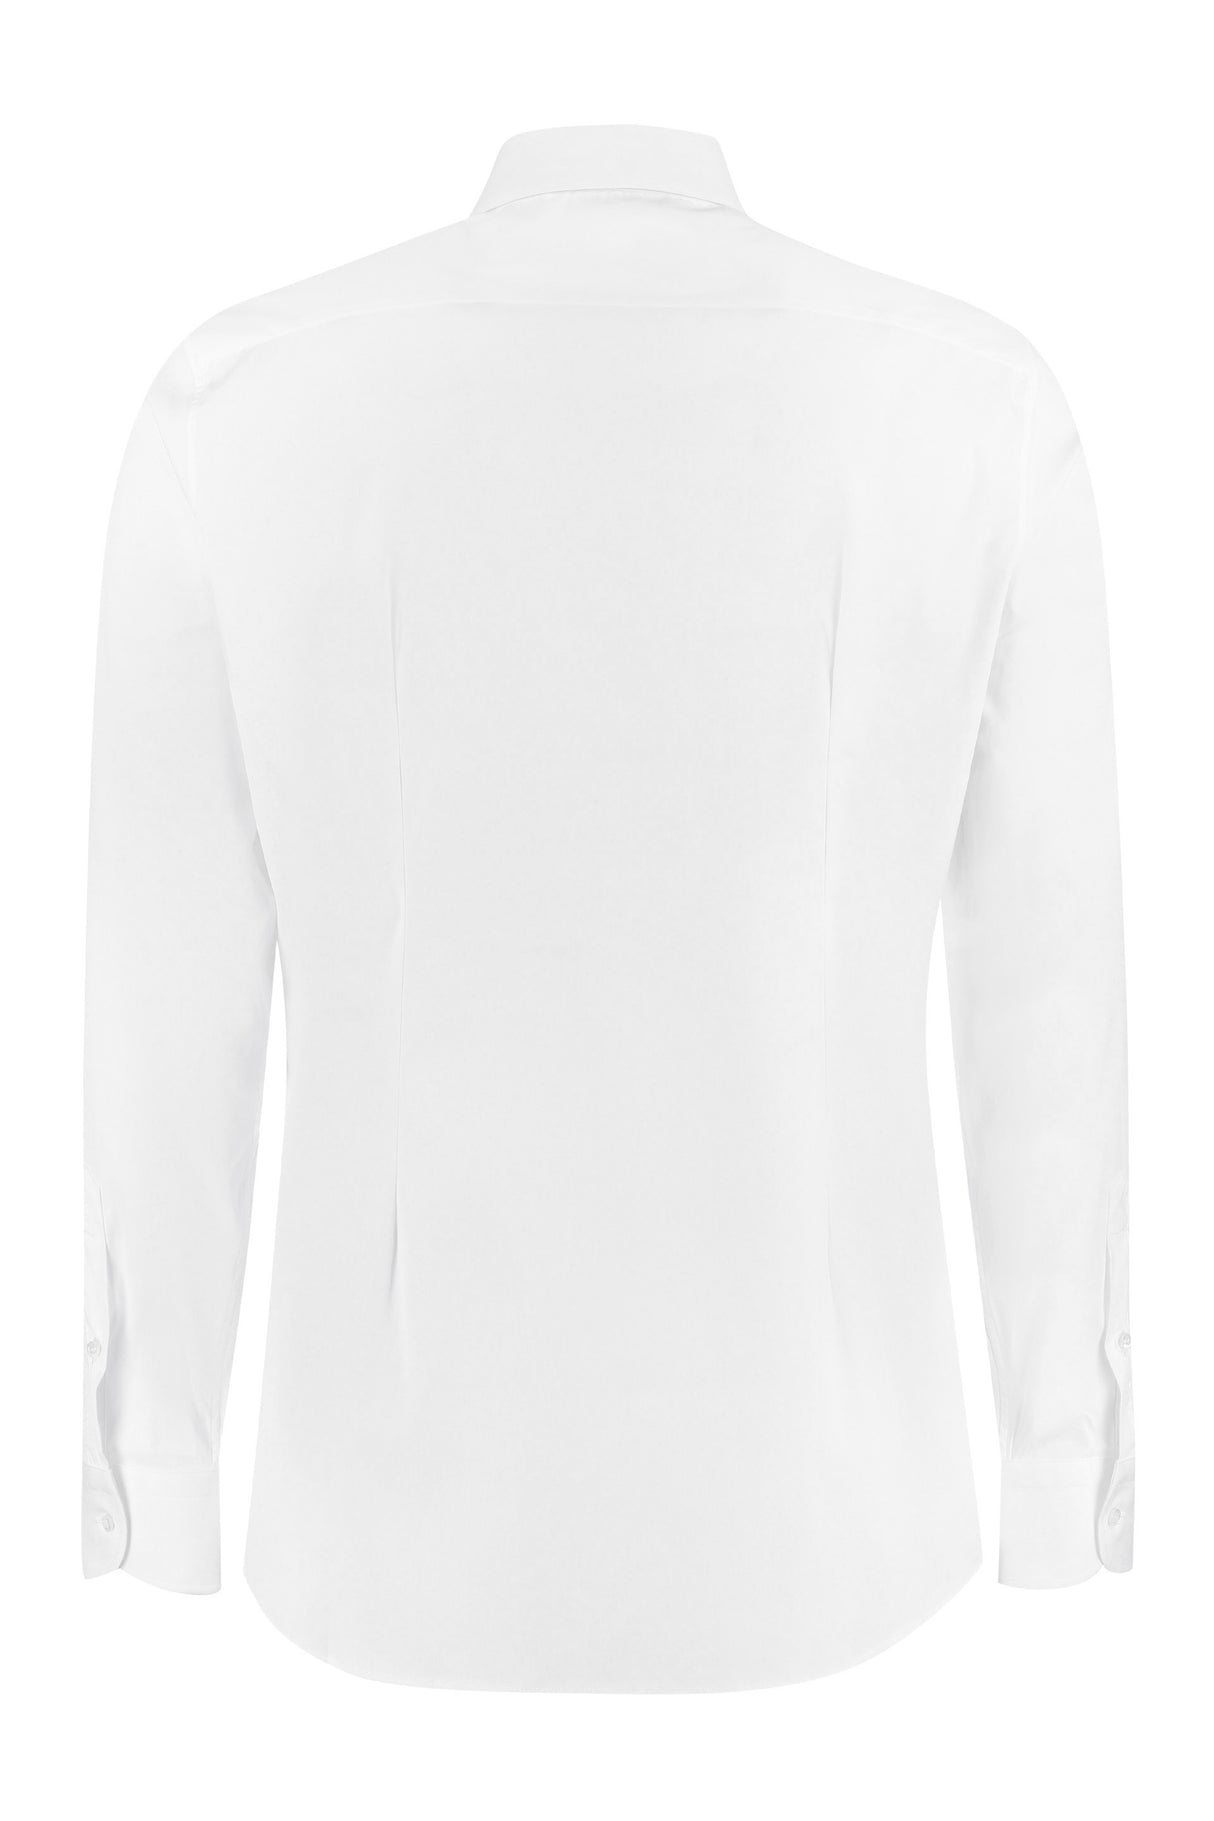 GUCCI Classic White Stretch Cotton Poplin Shirt for Men